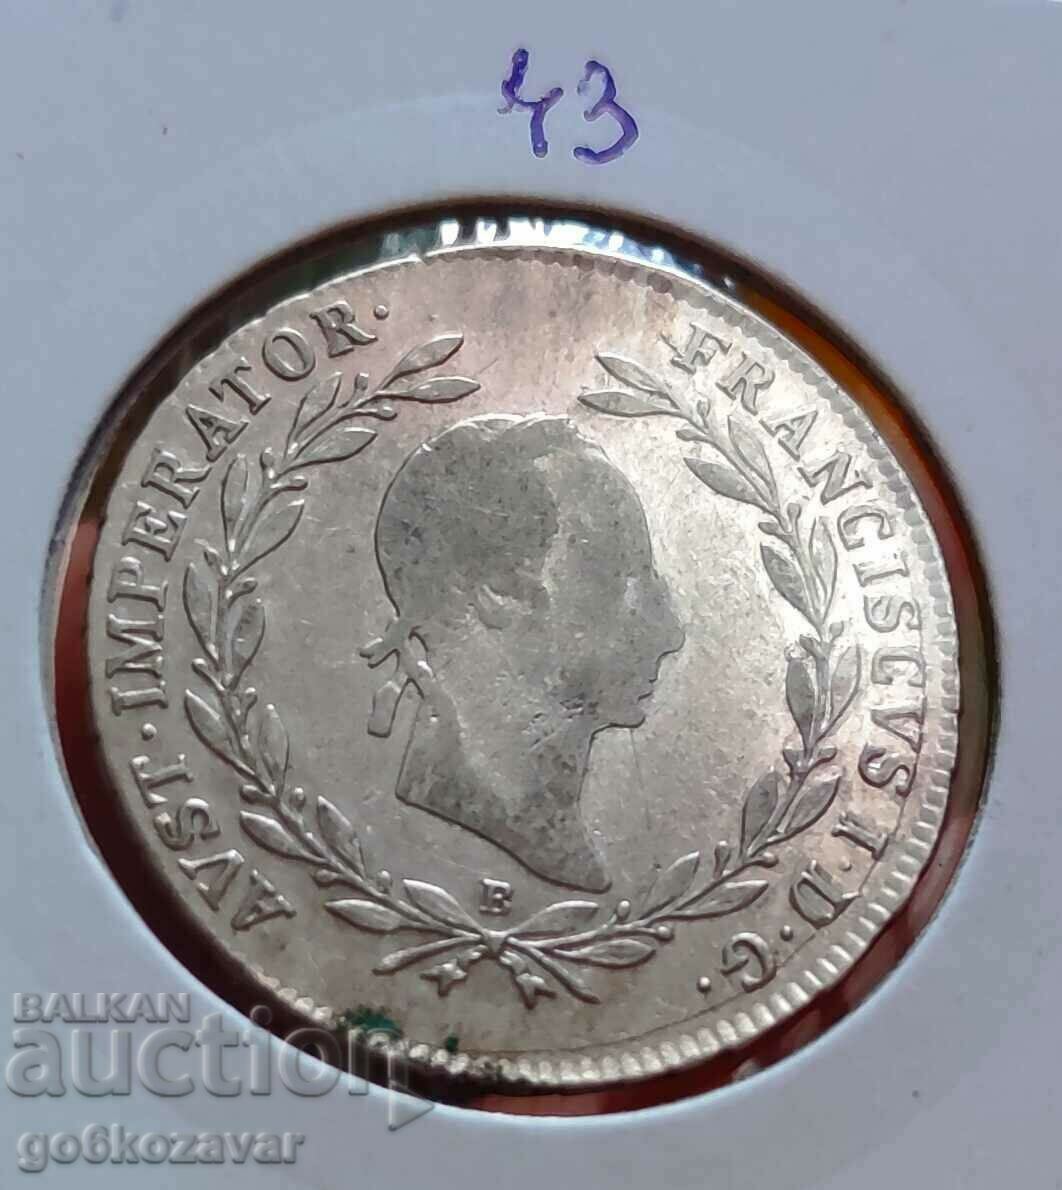 Austria 20 Kreuzer 1830 Silver Top coin!